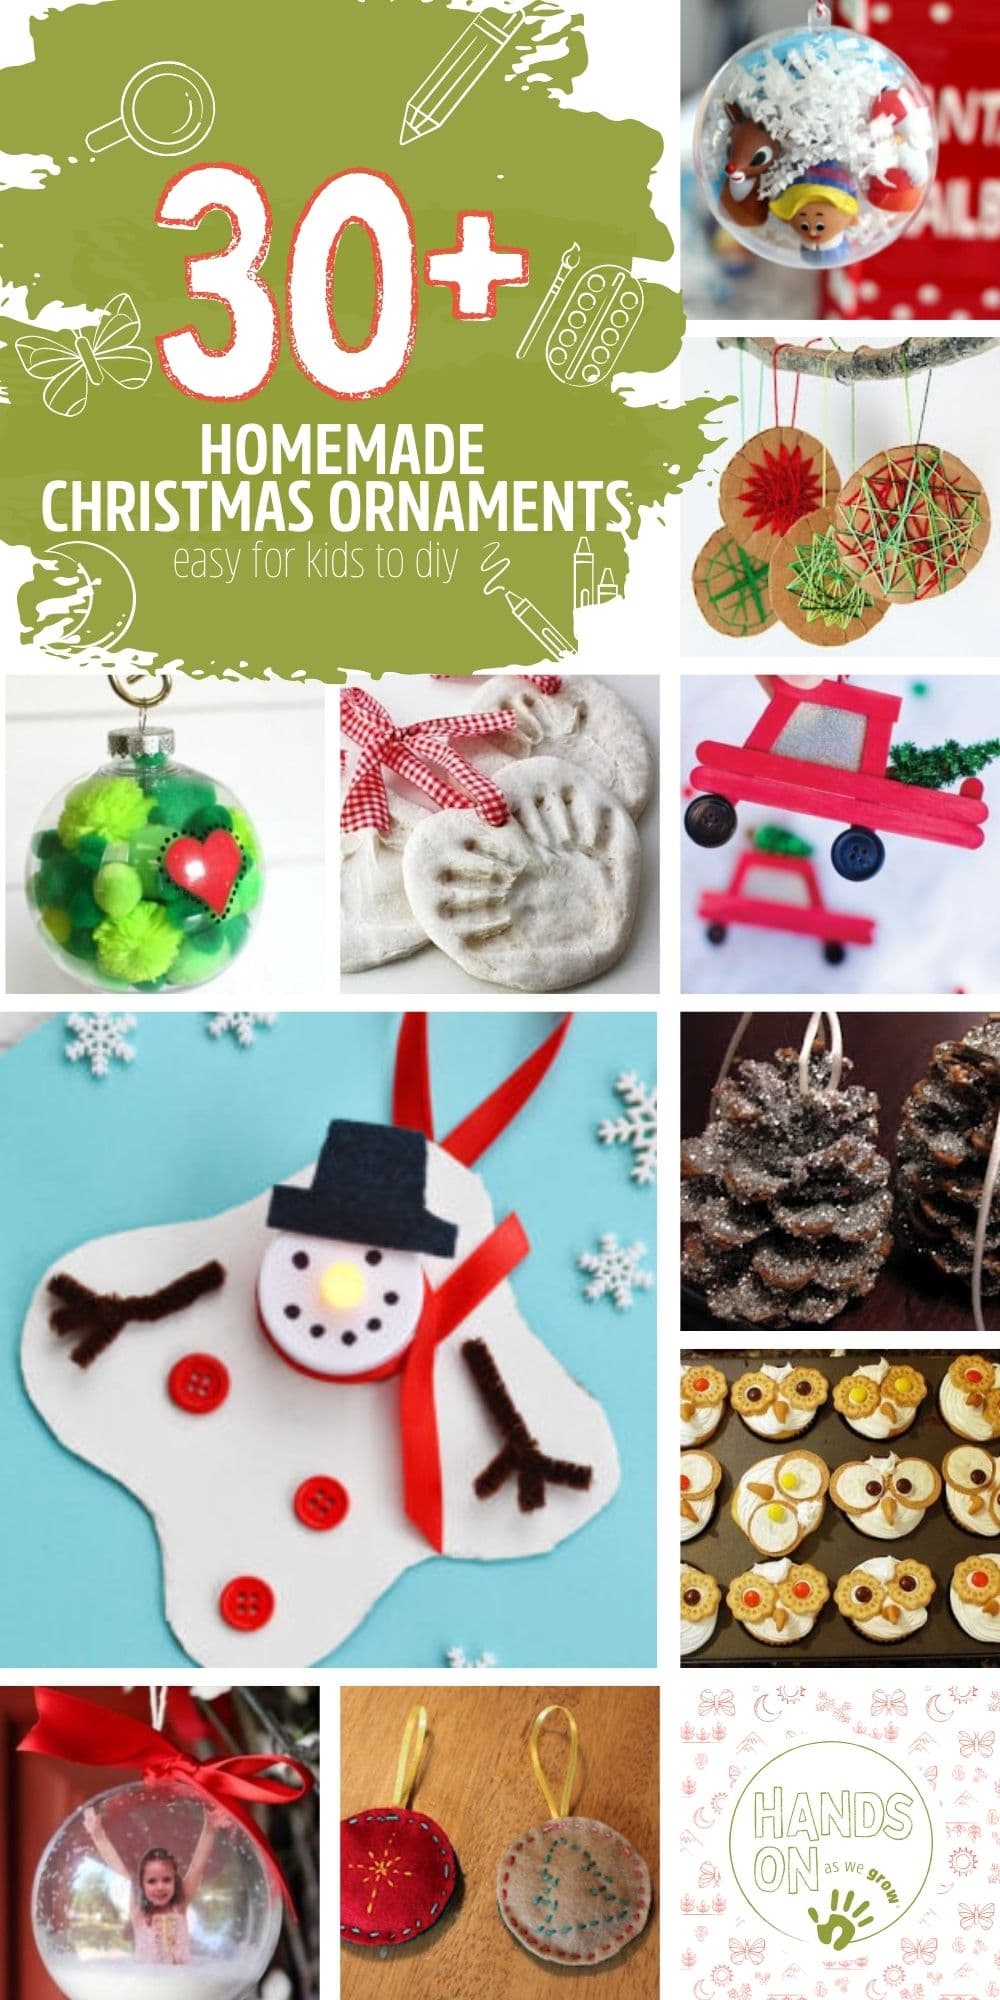 https://handsonaswegrow.com/wp-content/uploads/2021/10/30_homemade_Christmas_ornaments_diy_1000x2000_pinterest1.jpg